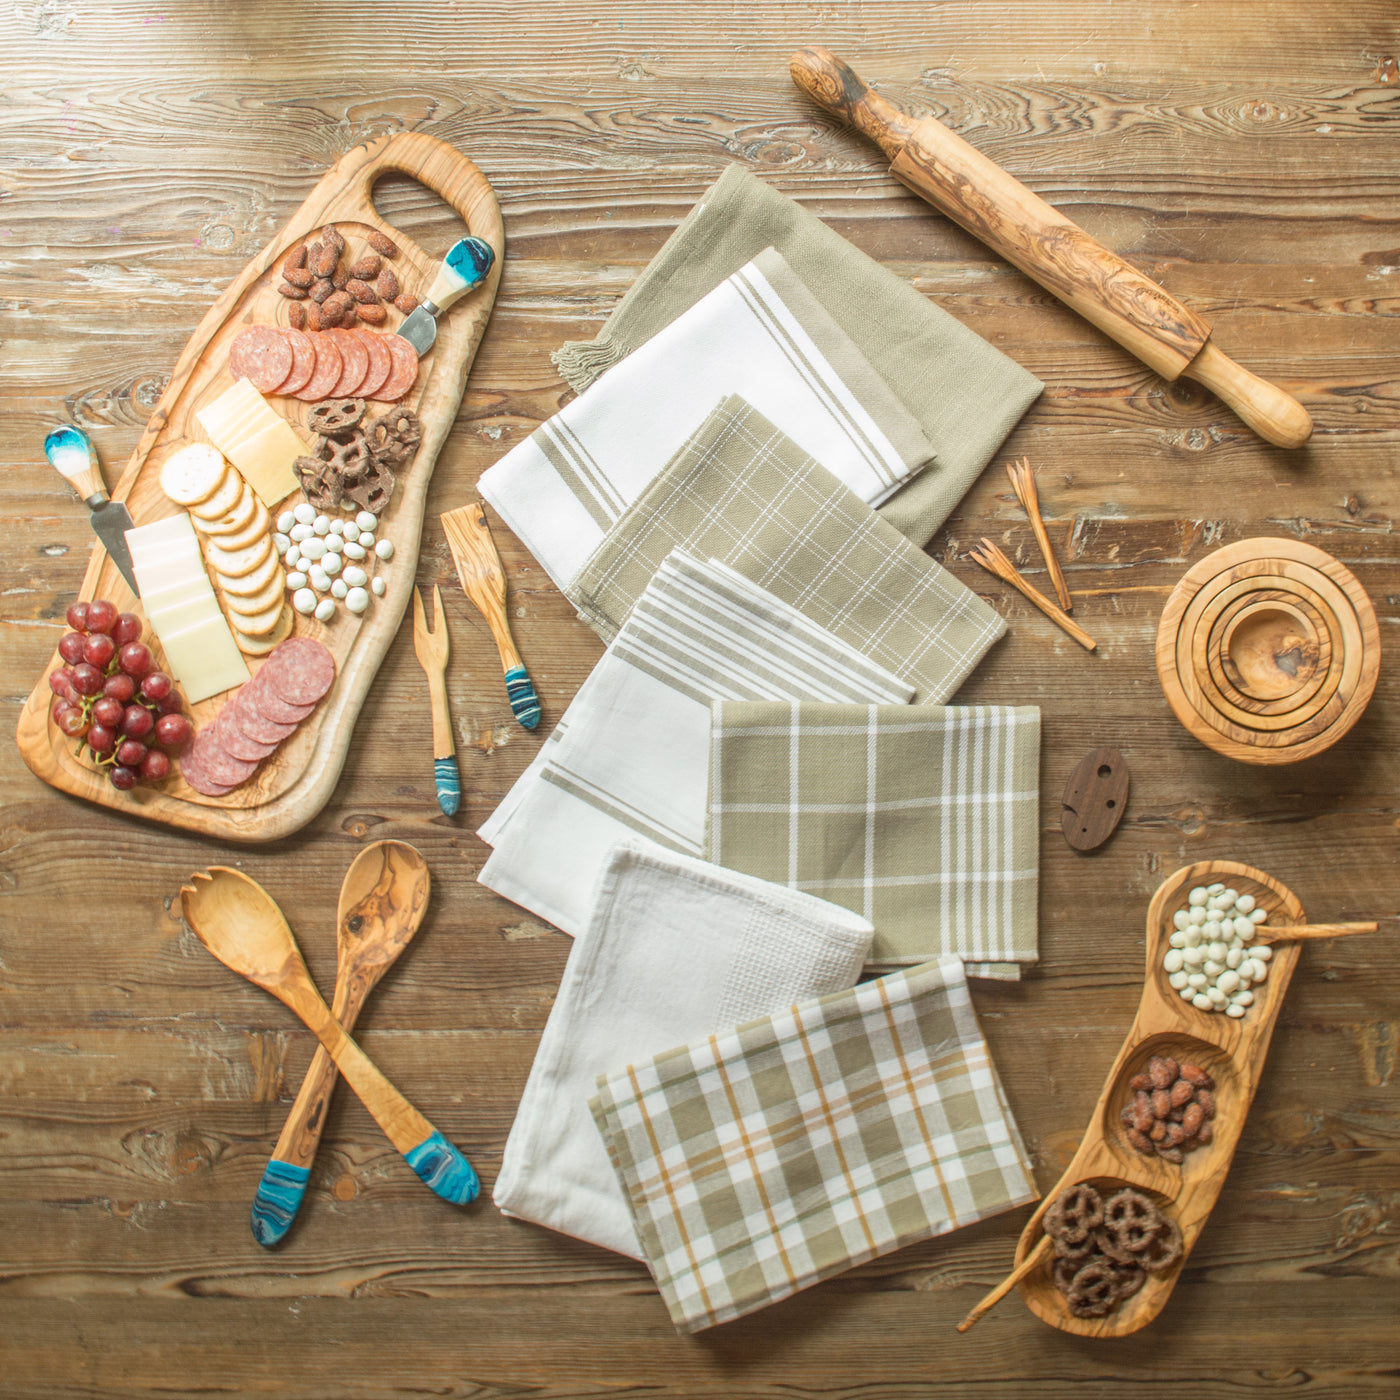 Plaid Print Homespun Fabric – CoCo B. Kitchen & Home